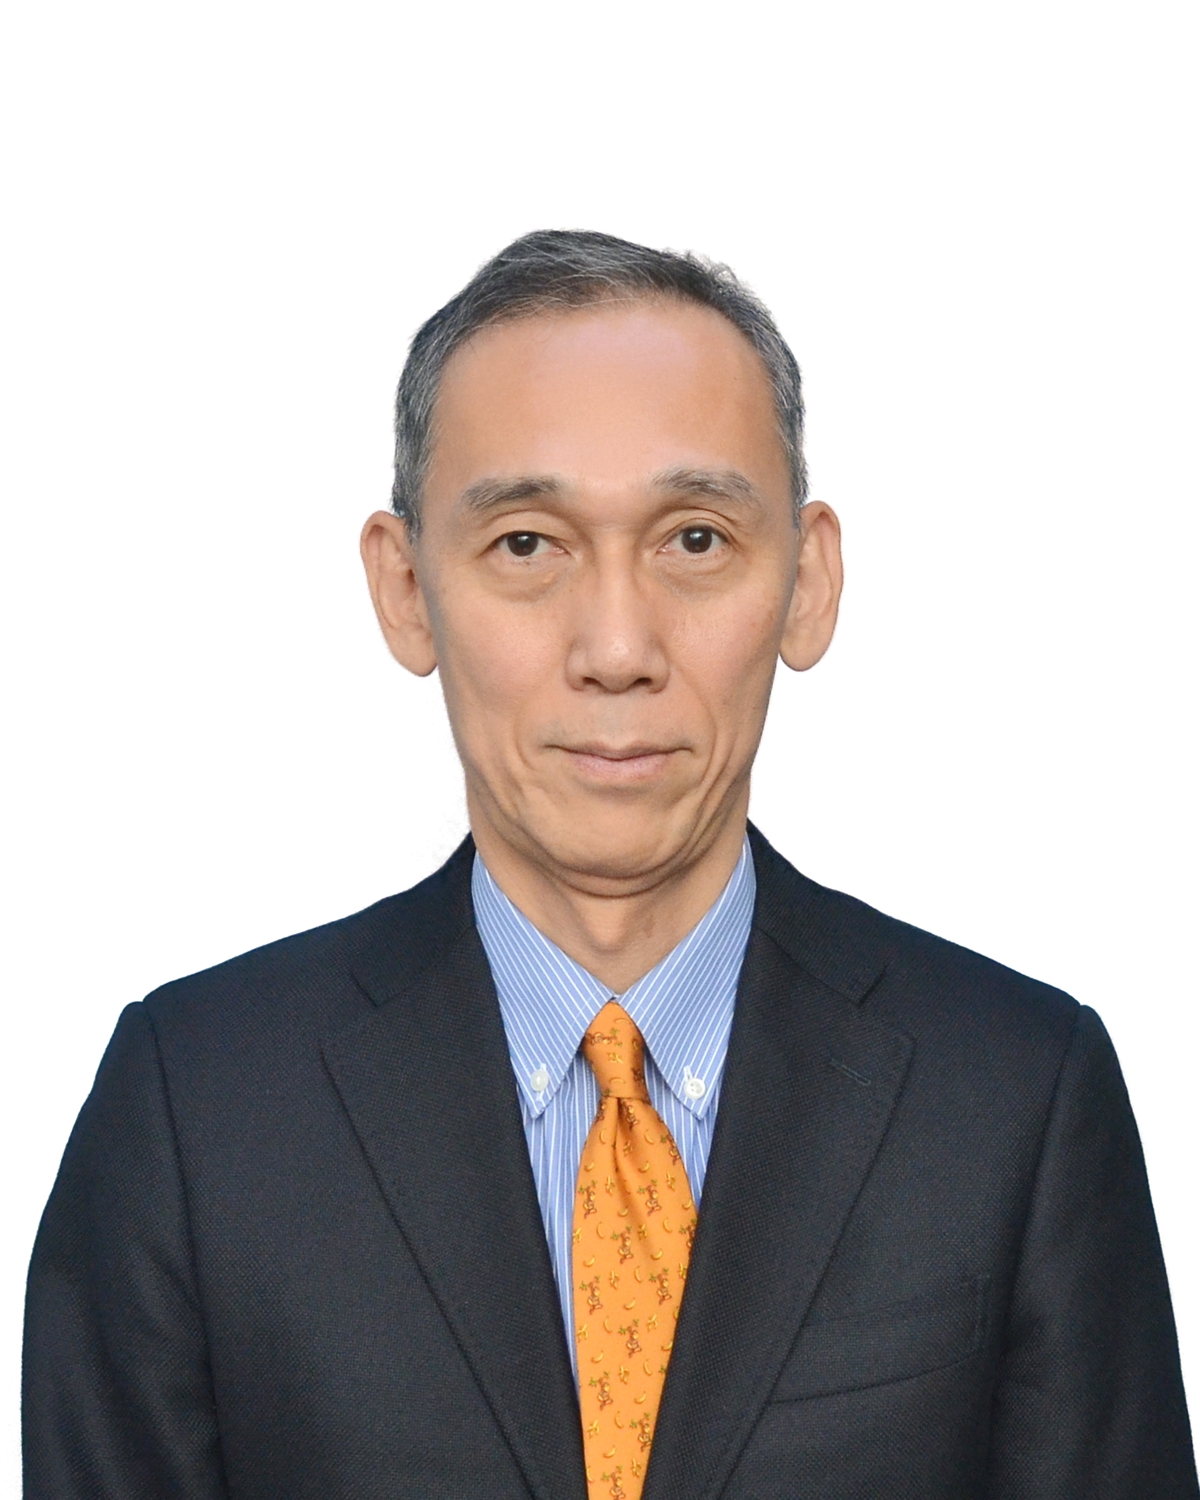 ong-hiroyuki-tong-giam-doc-moi-cua-toyota-viet-nam-mr-hiroyuki-ueda-toyota-motor-vietnams-new-president.jpg